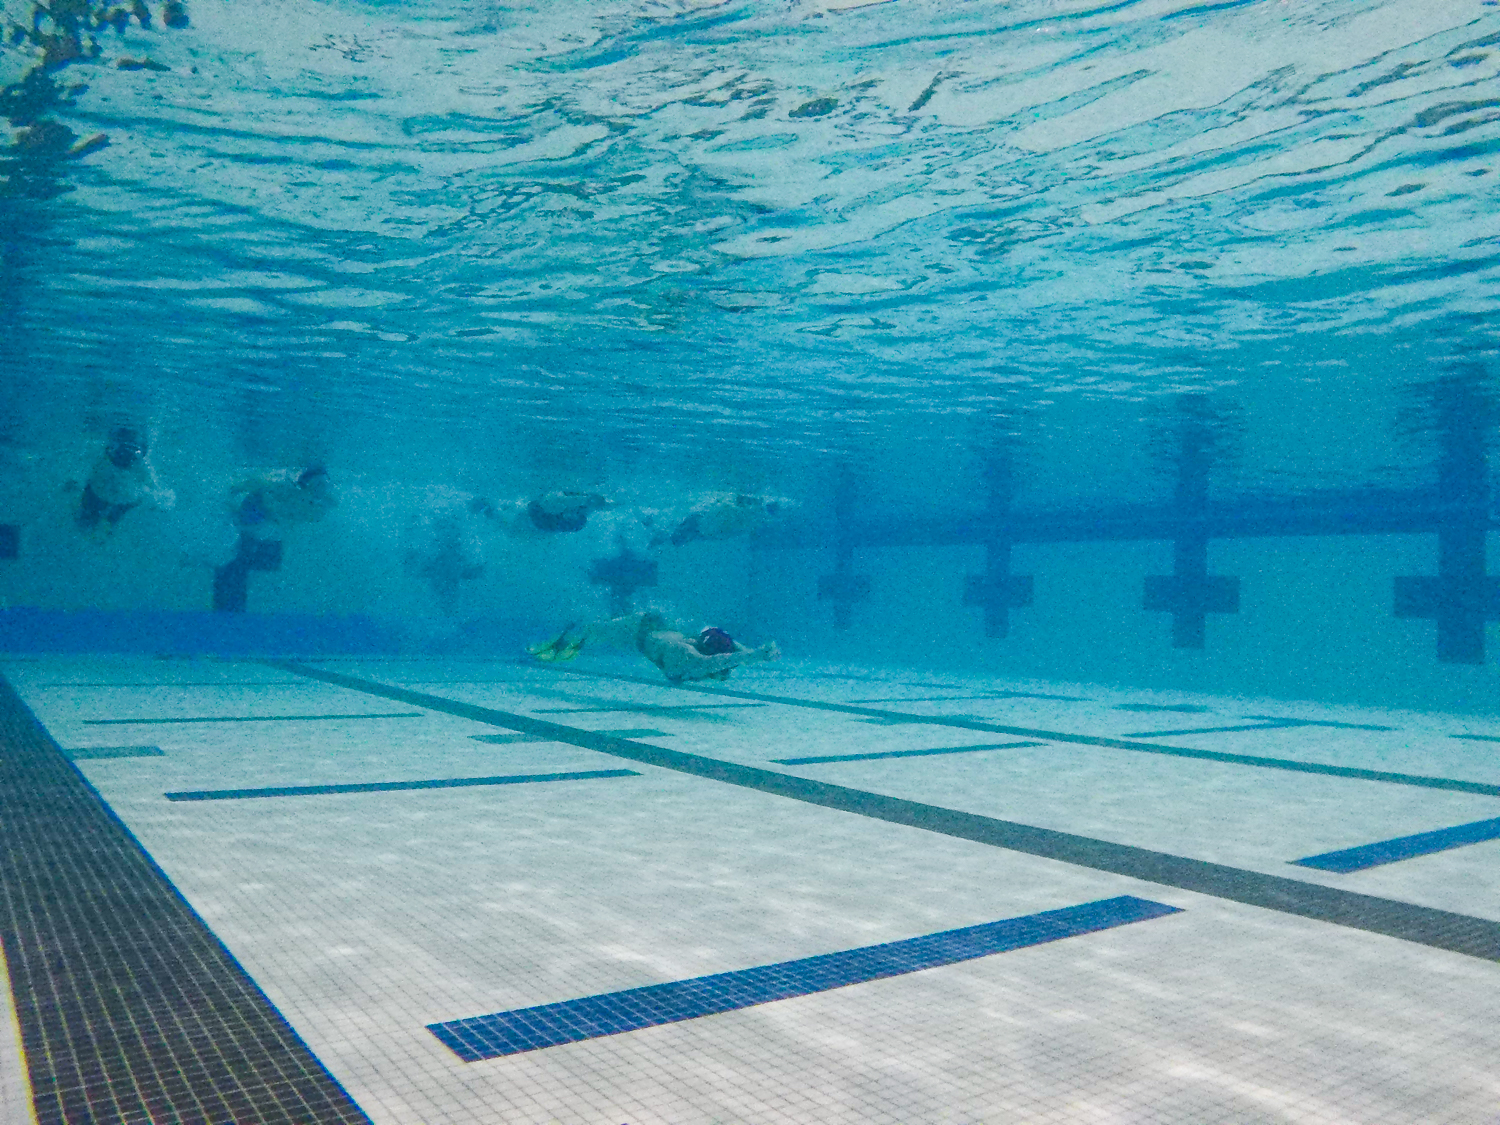 Deep+dive+into+hockey+%E2%80%94+underwater